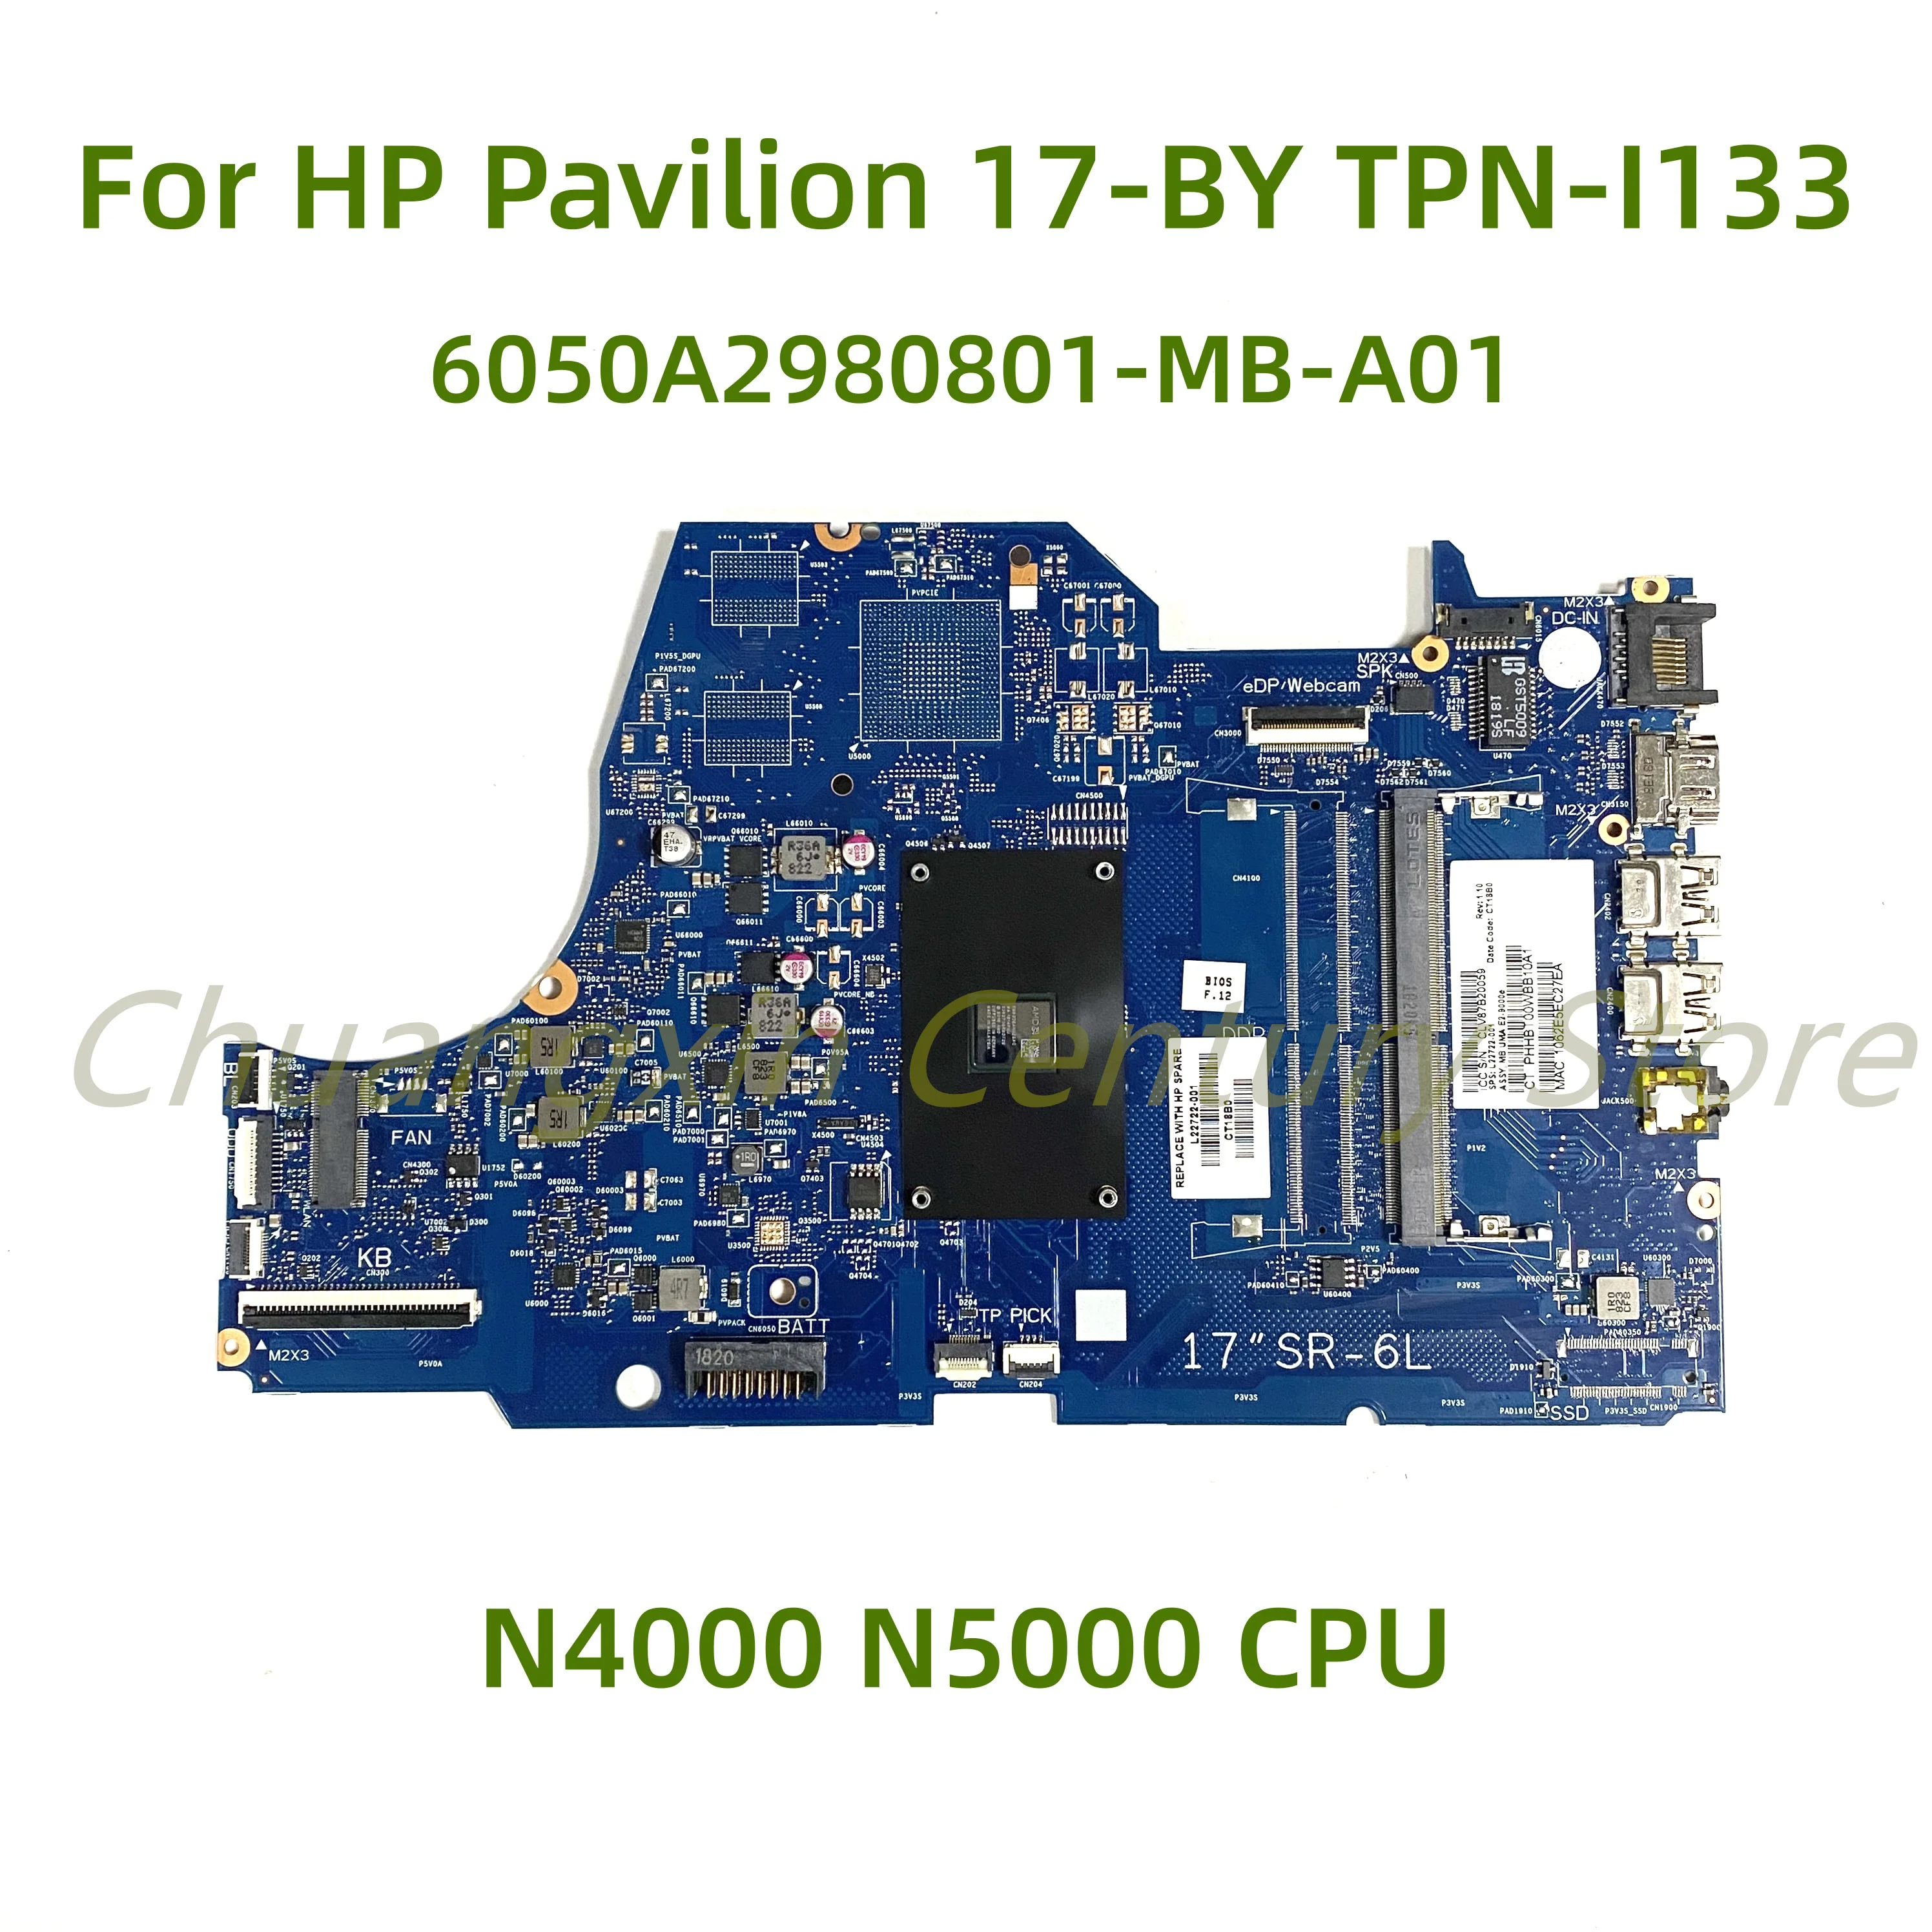 placa-base-para-portatil-hp-pavilion-17-by-tpn-i133-6050a2980801-mb-a01-a1-con-n4000-n5000-cpu-100-probado-funciona-completamente